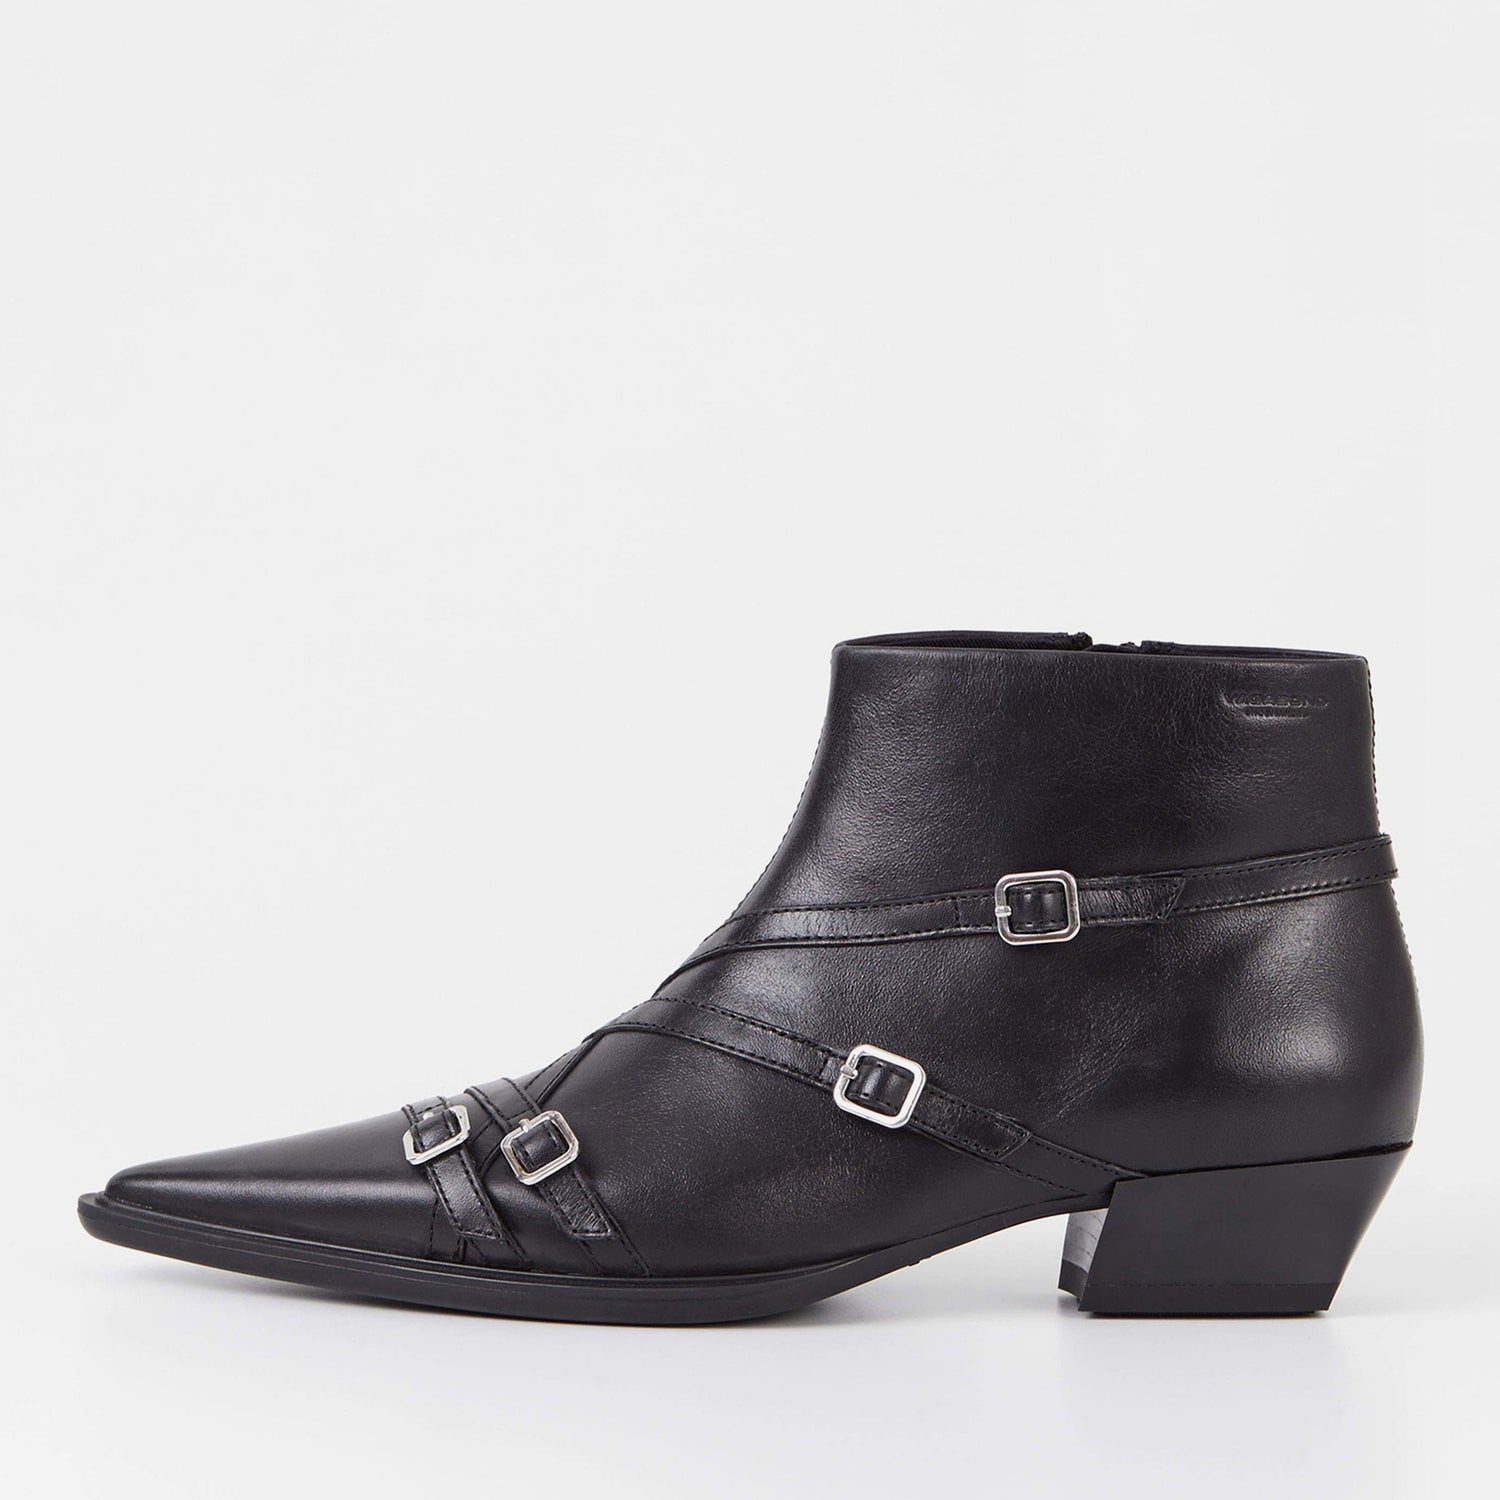 Vagabond Women's Cassie Leather Ankle Boots - UK 3